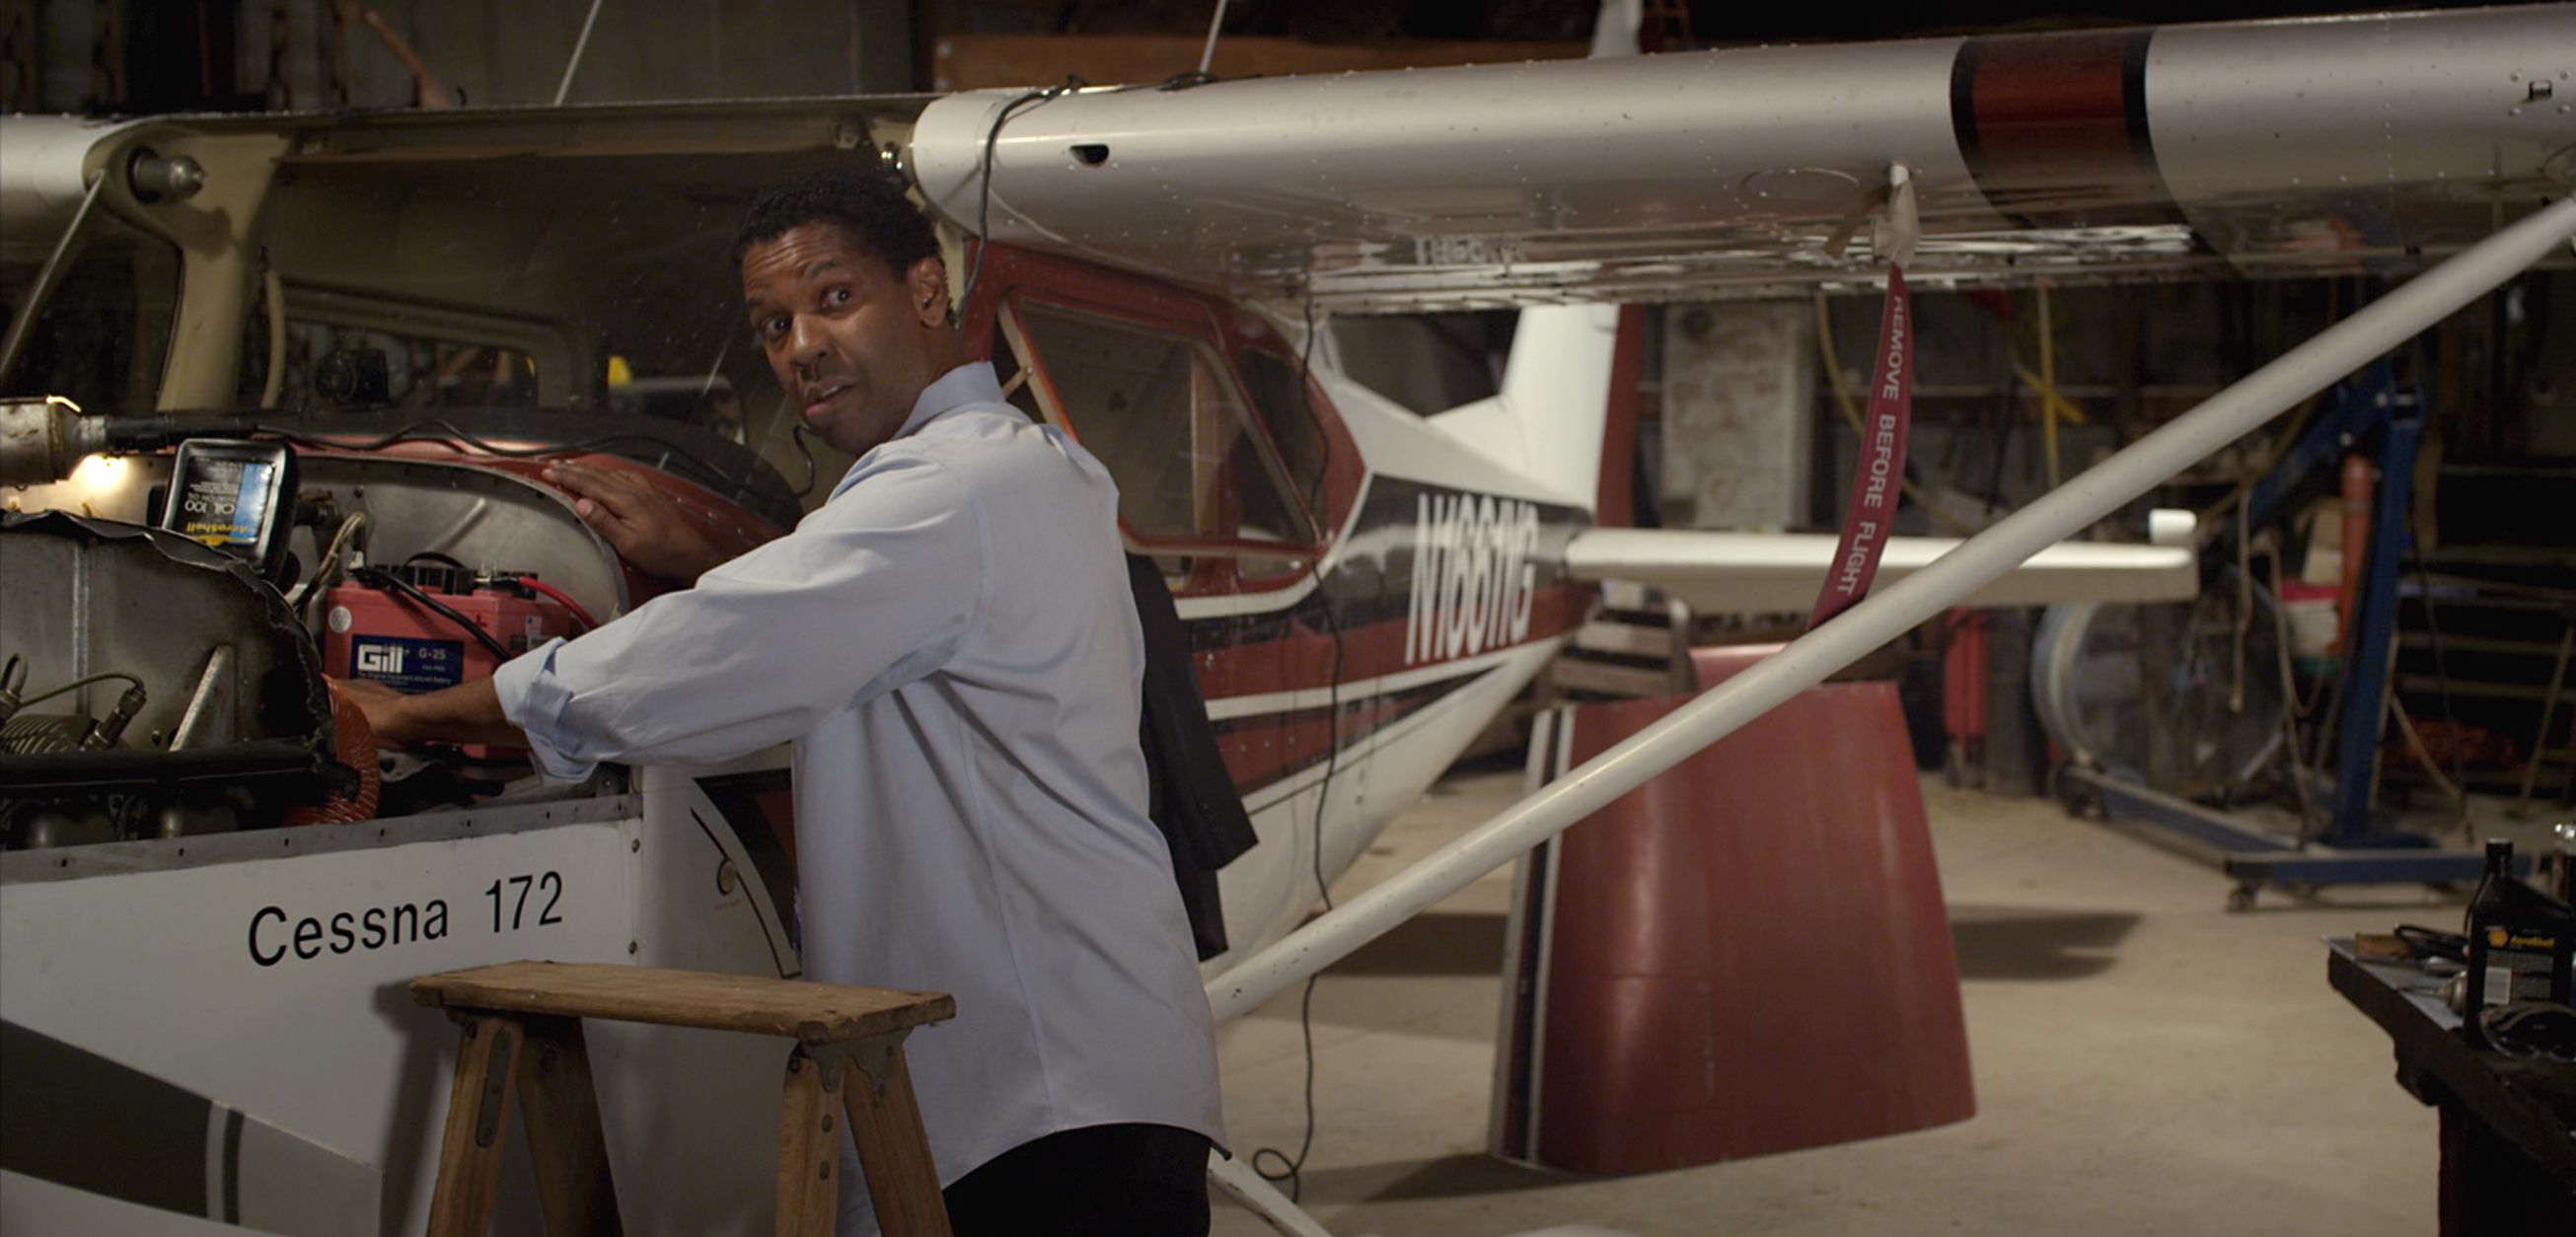 Denzel working on a plane